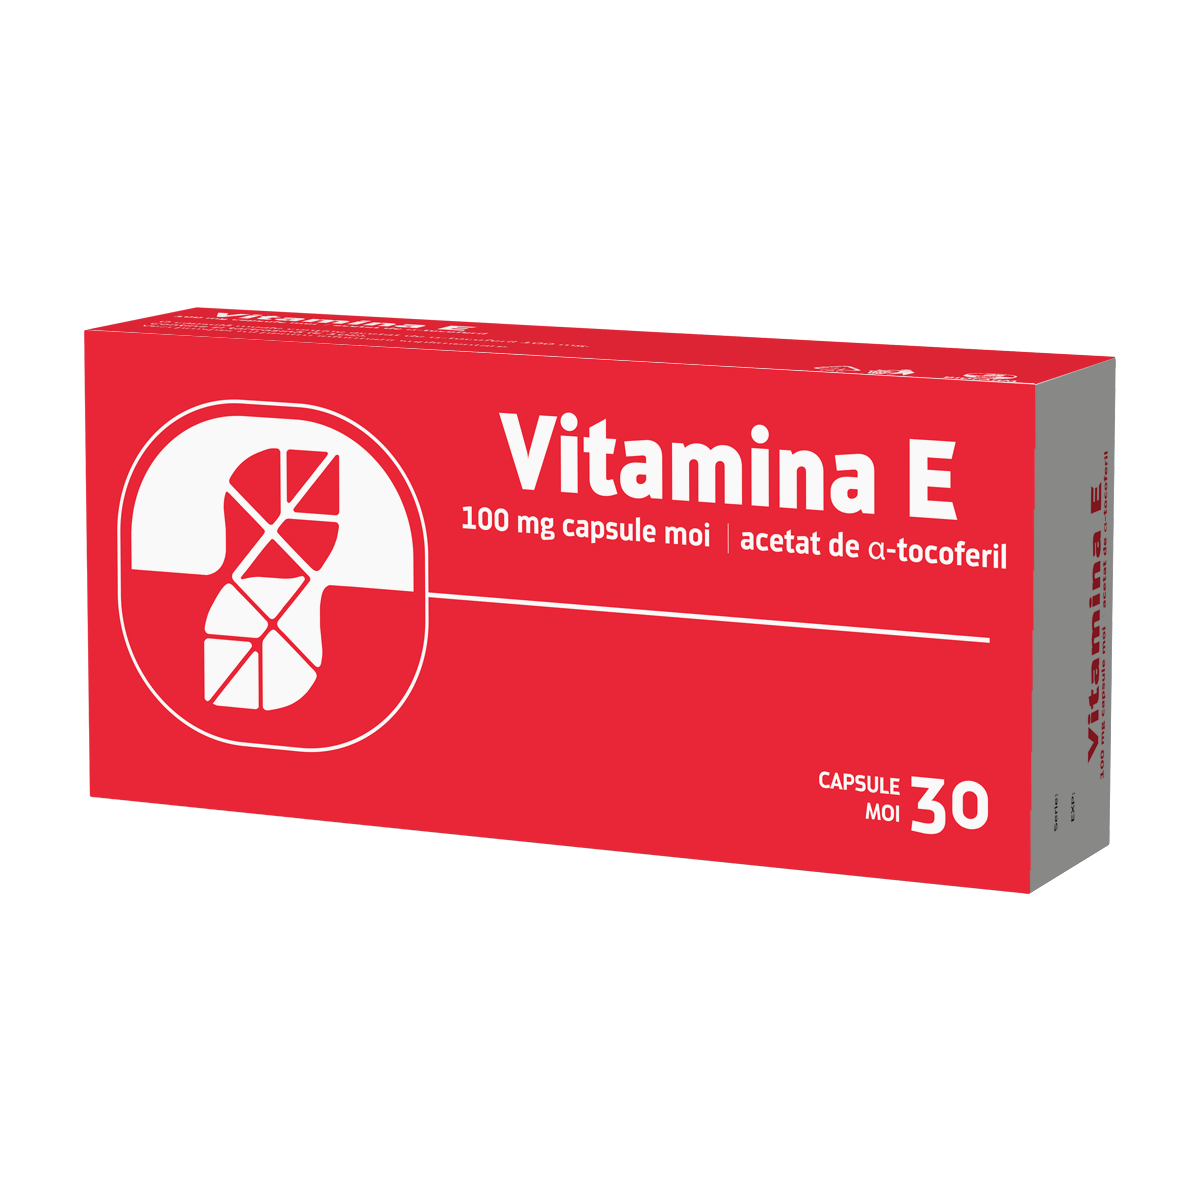 Generale - Vitamina E, 30 capsule moi, Biofarm, sinapis.ro